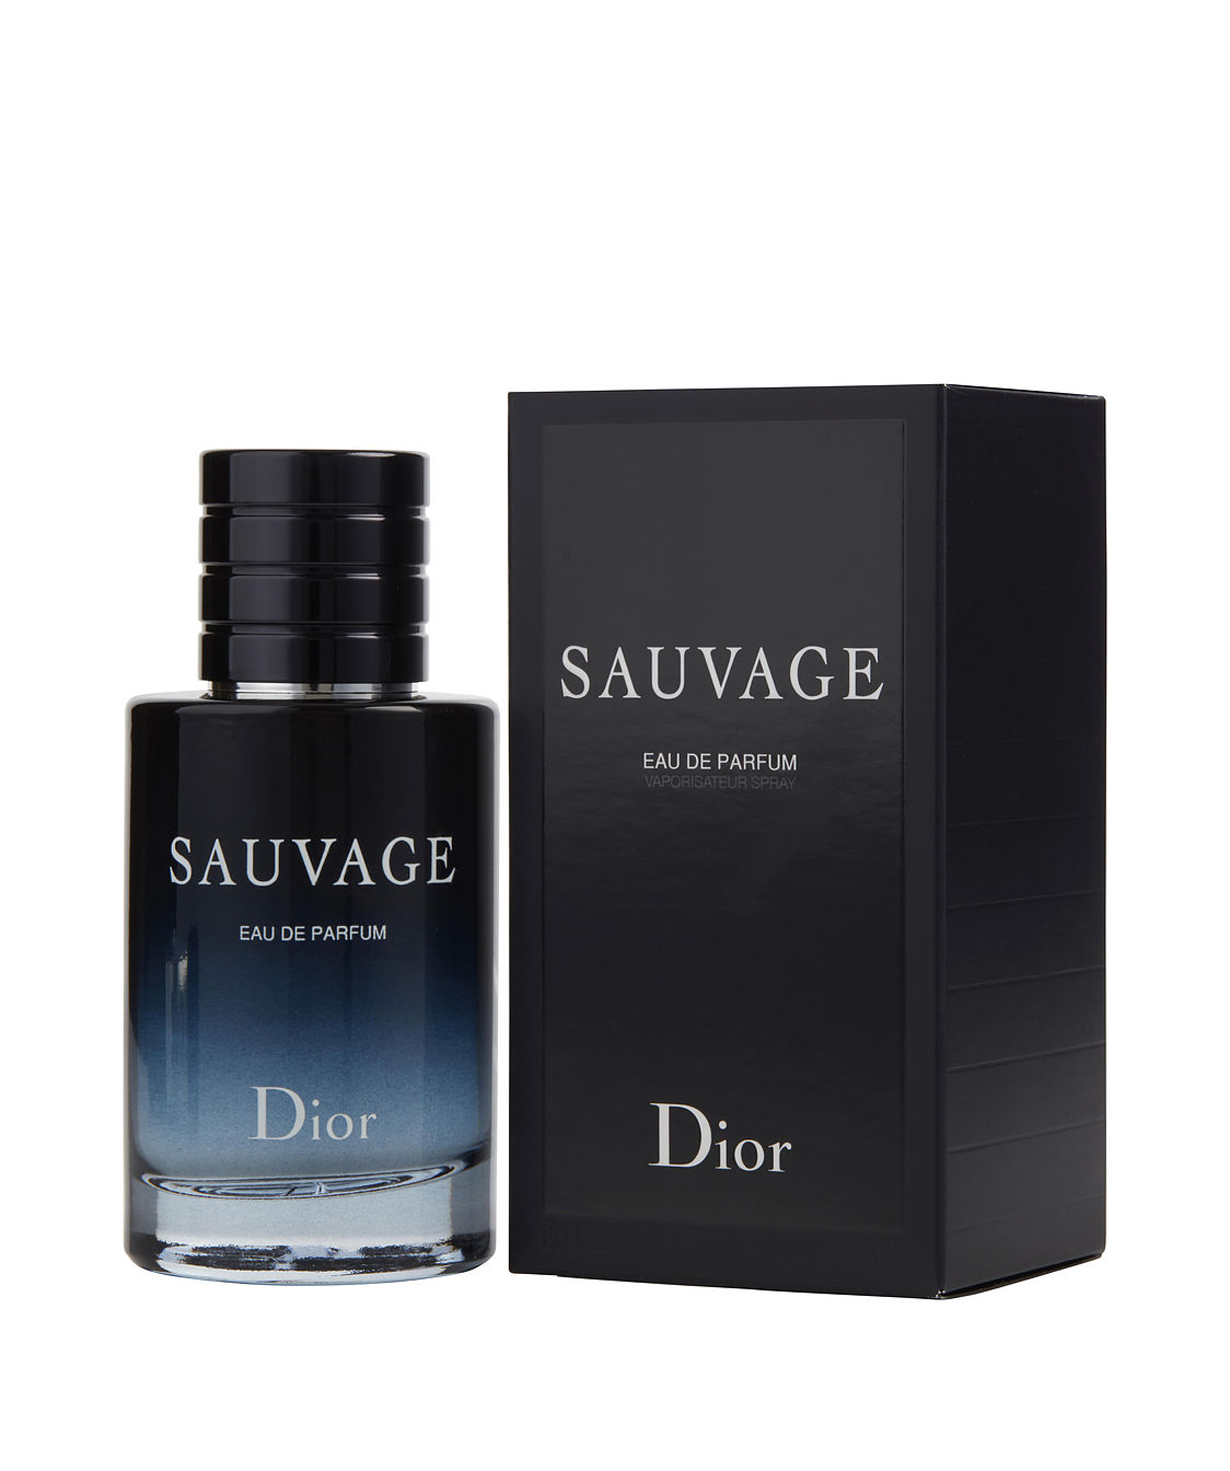 Օծանելիք «Dior sauvage» eau de parfum տղամարդու